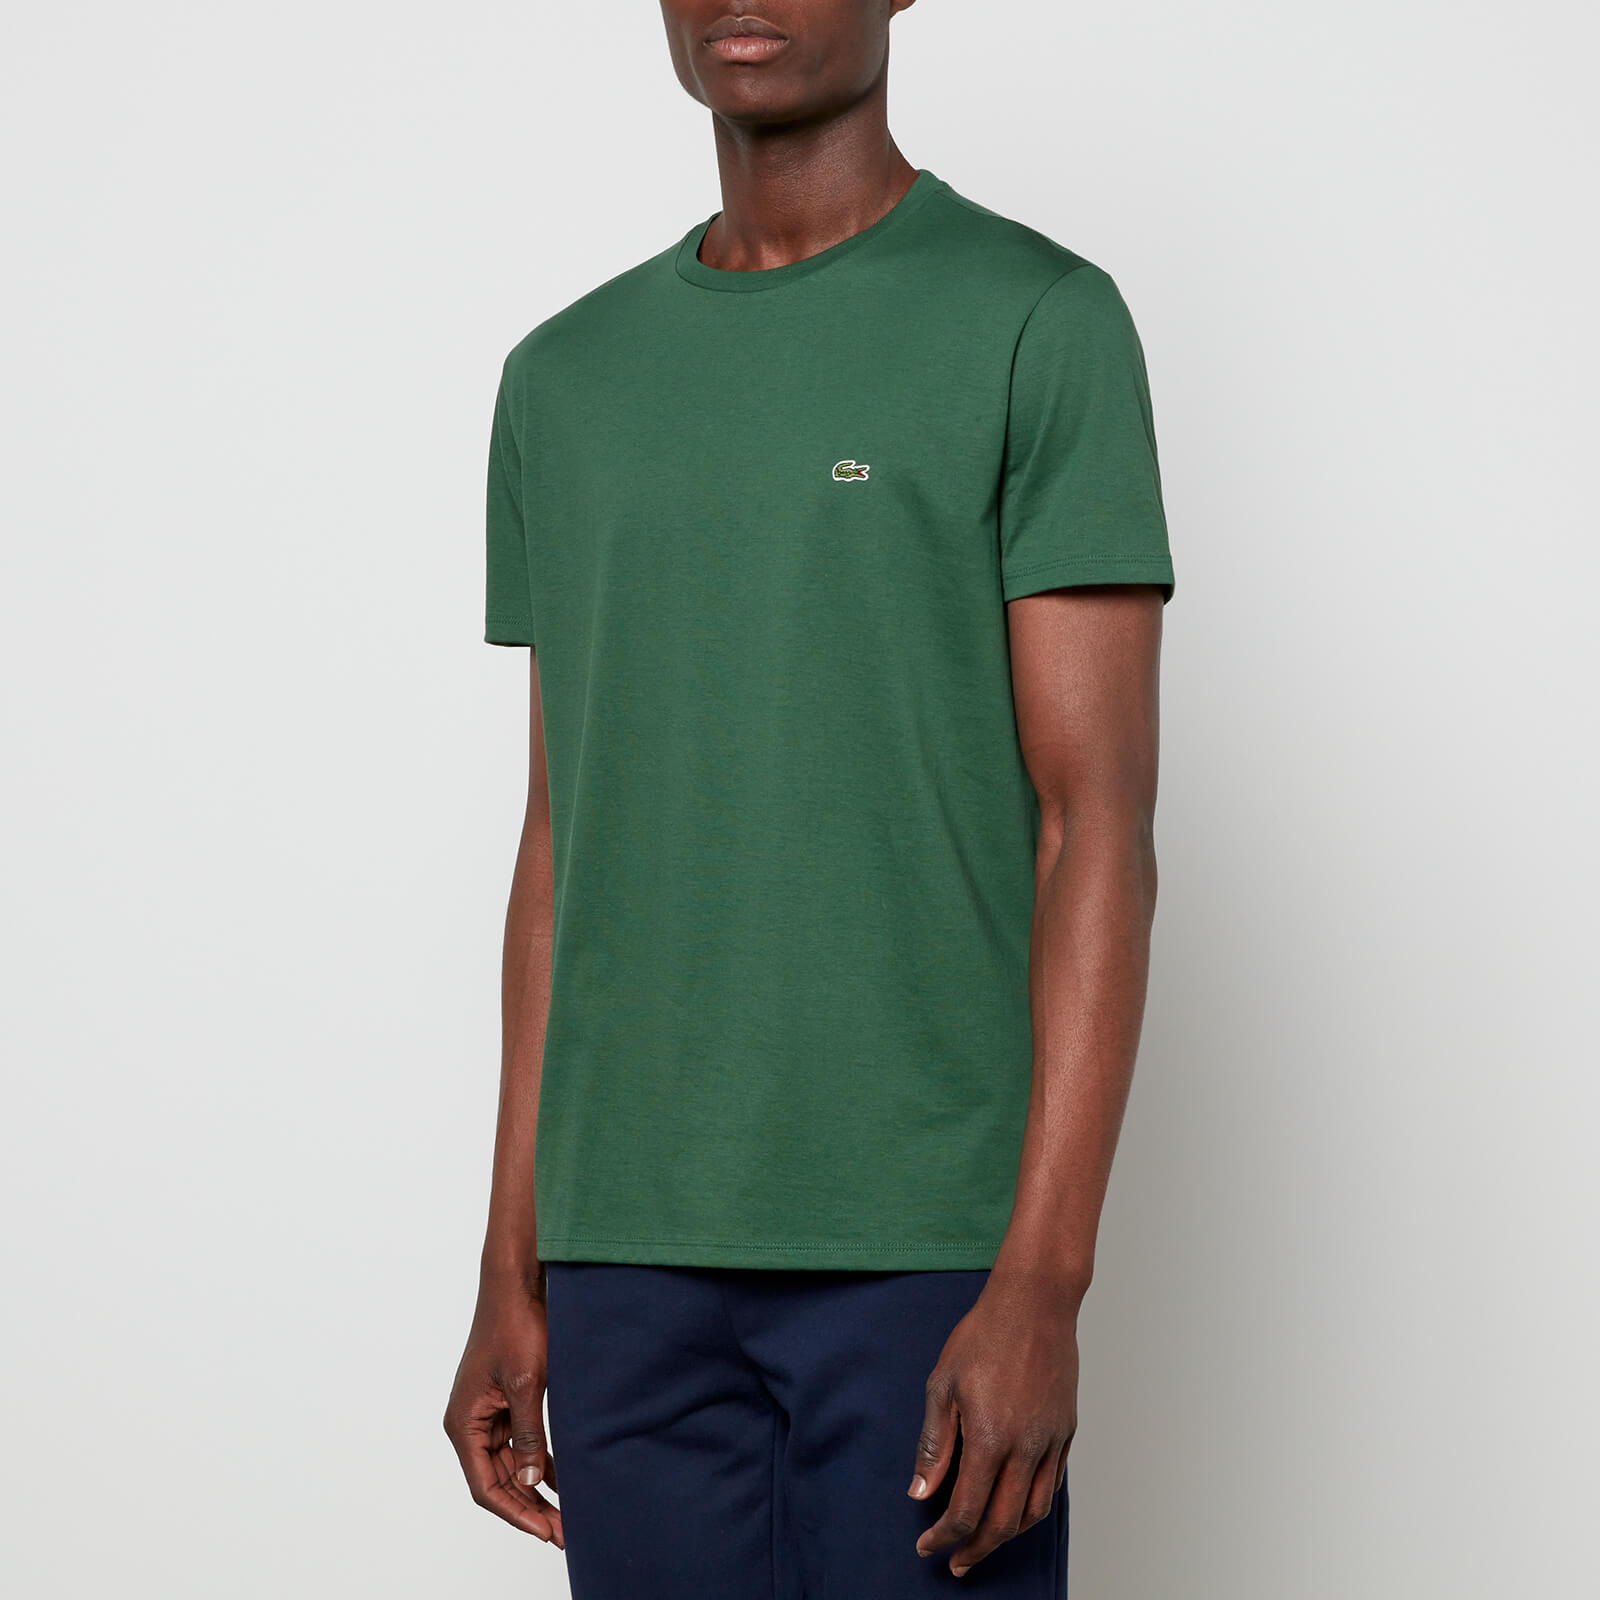 Lacoste Men's Classic T-Shirt - Green